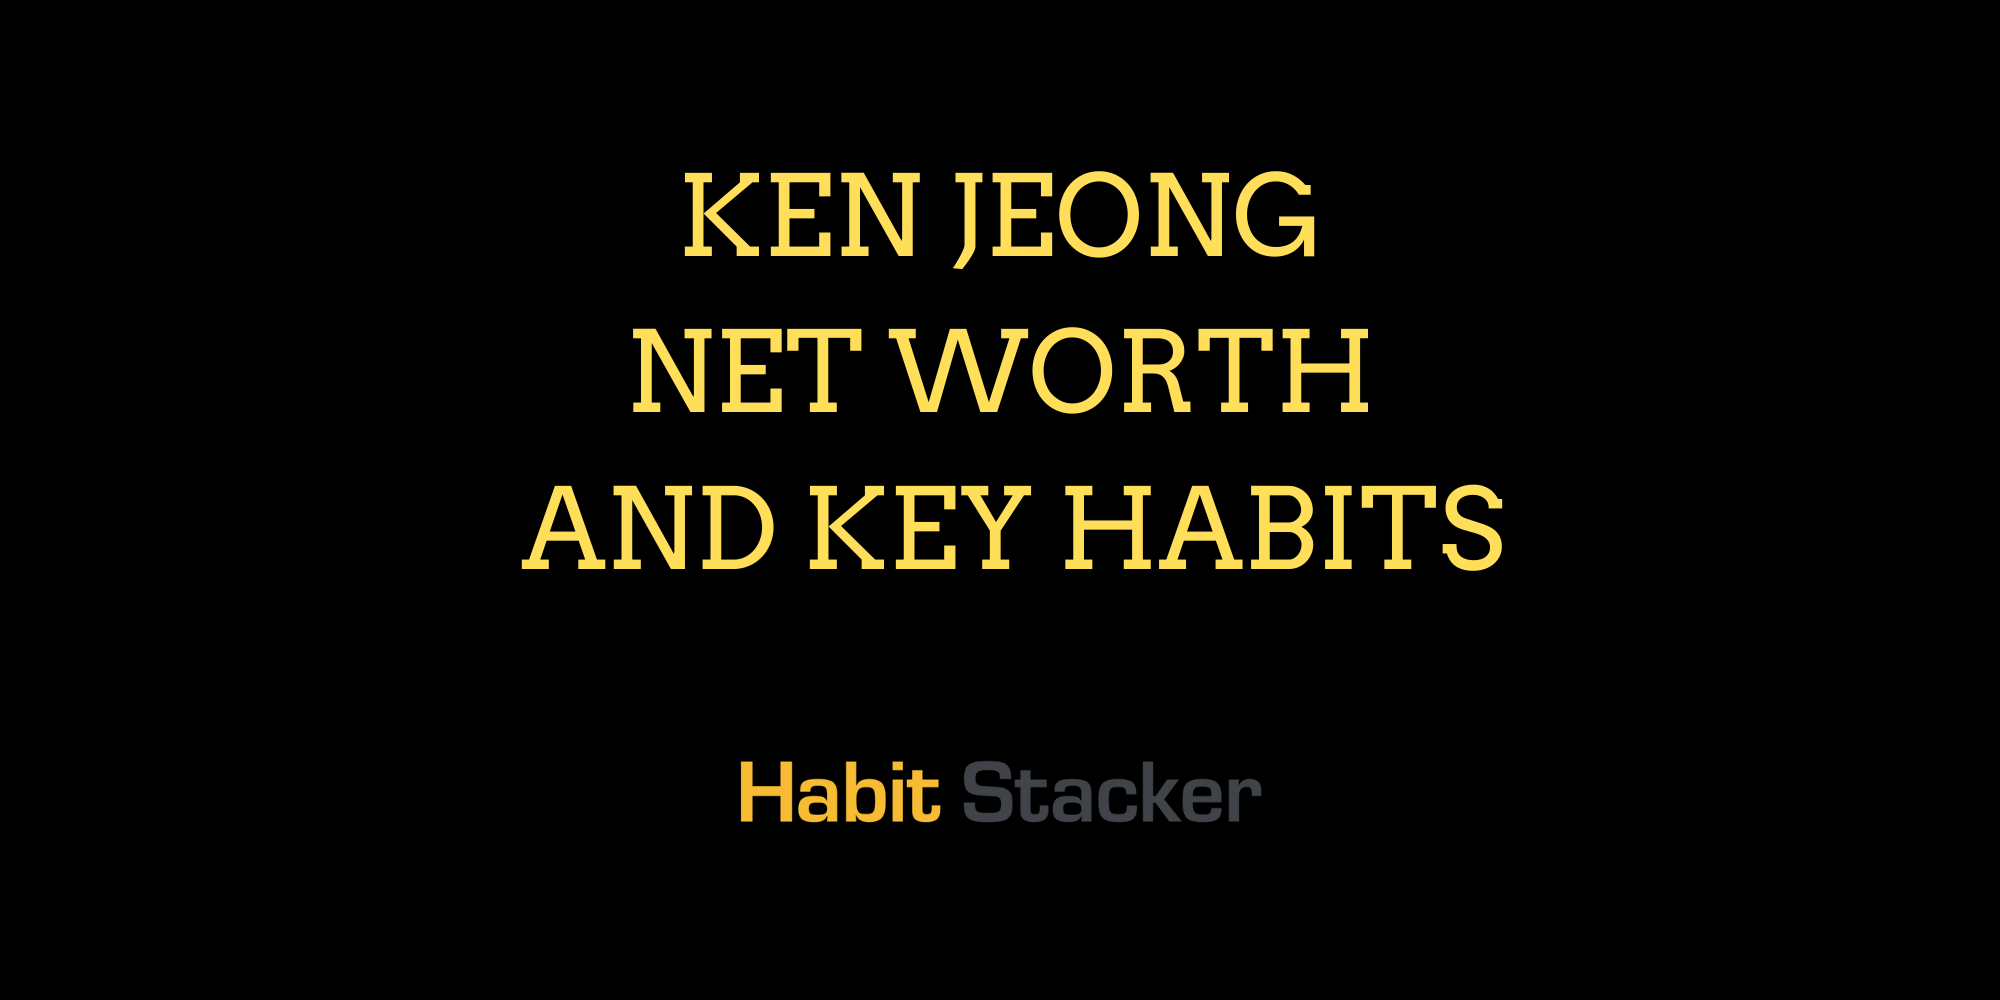 Ken Jeong Net Worth and Key Habits